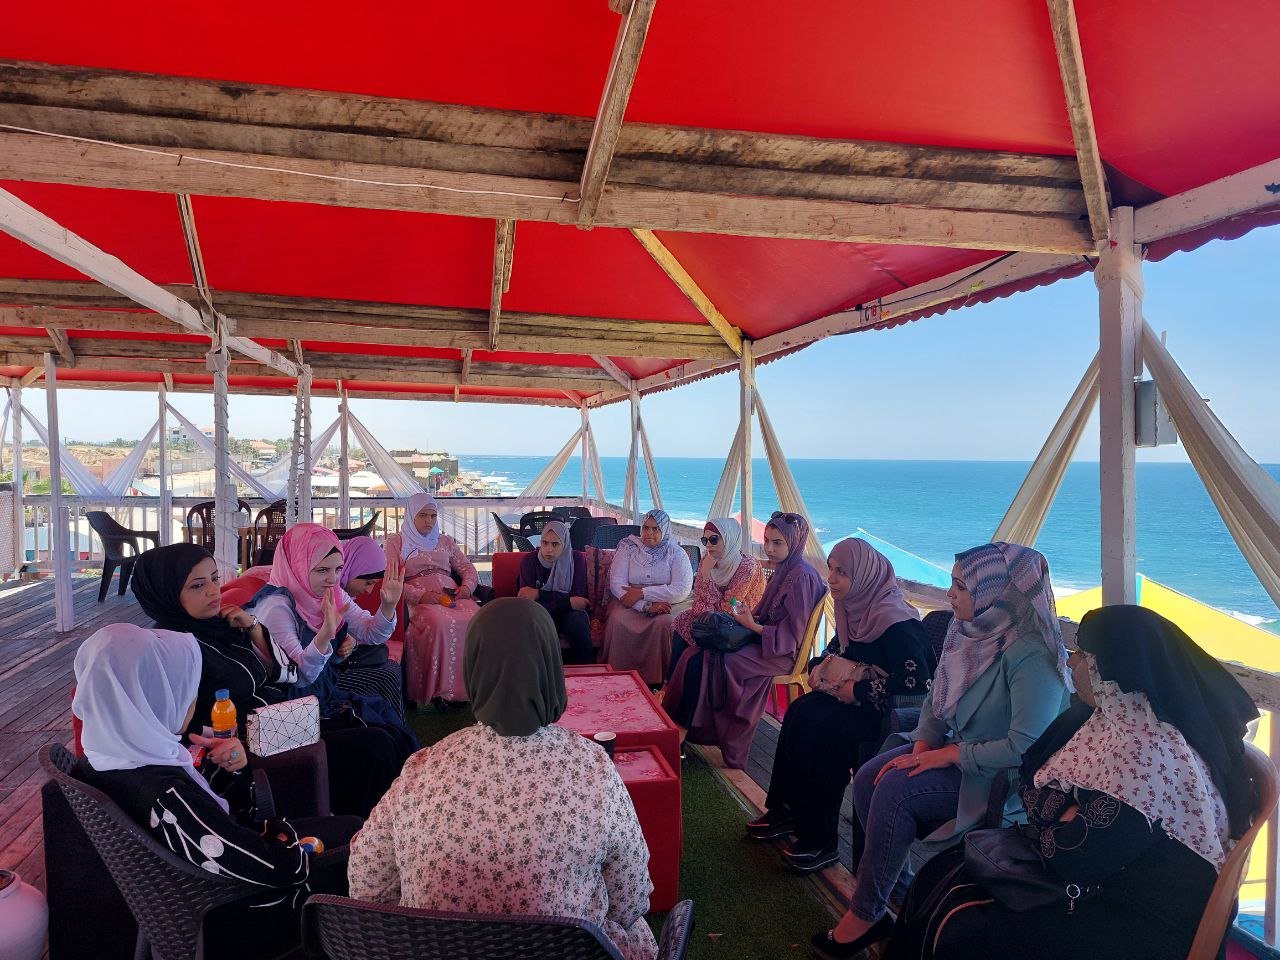  An entertaining awareness meeting in Gaza